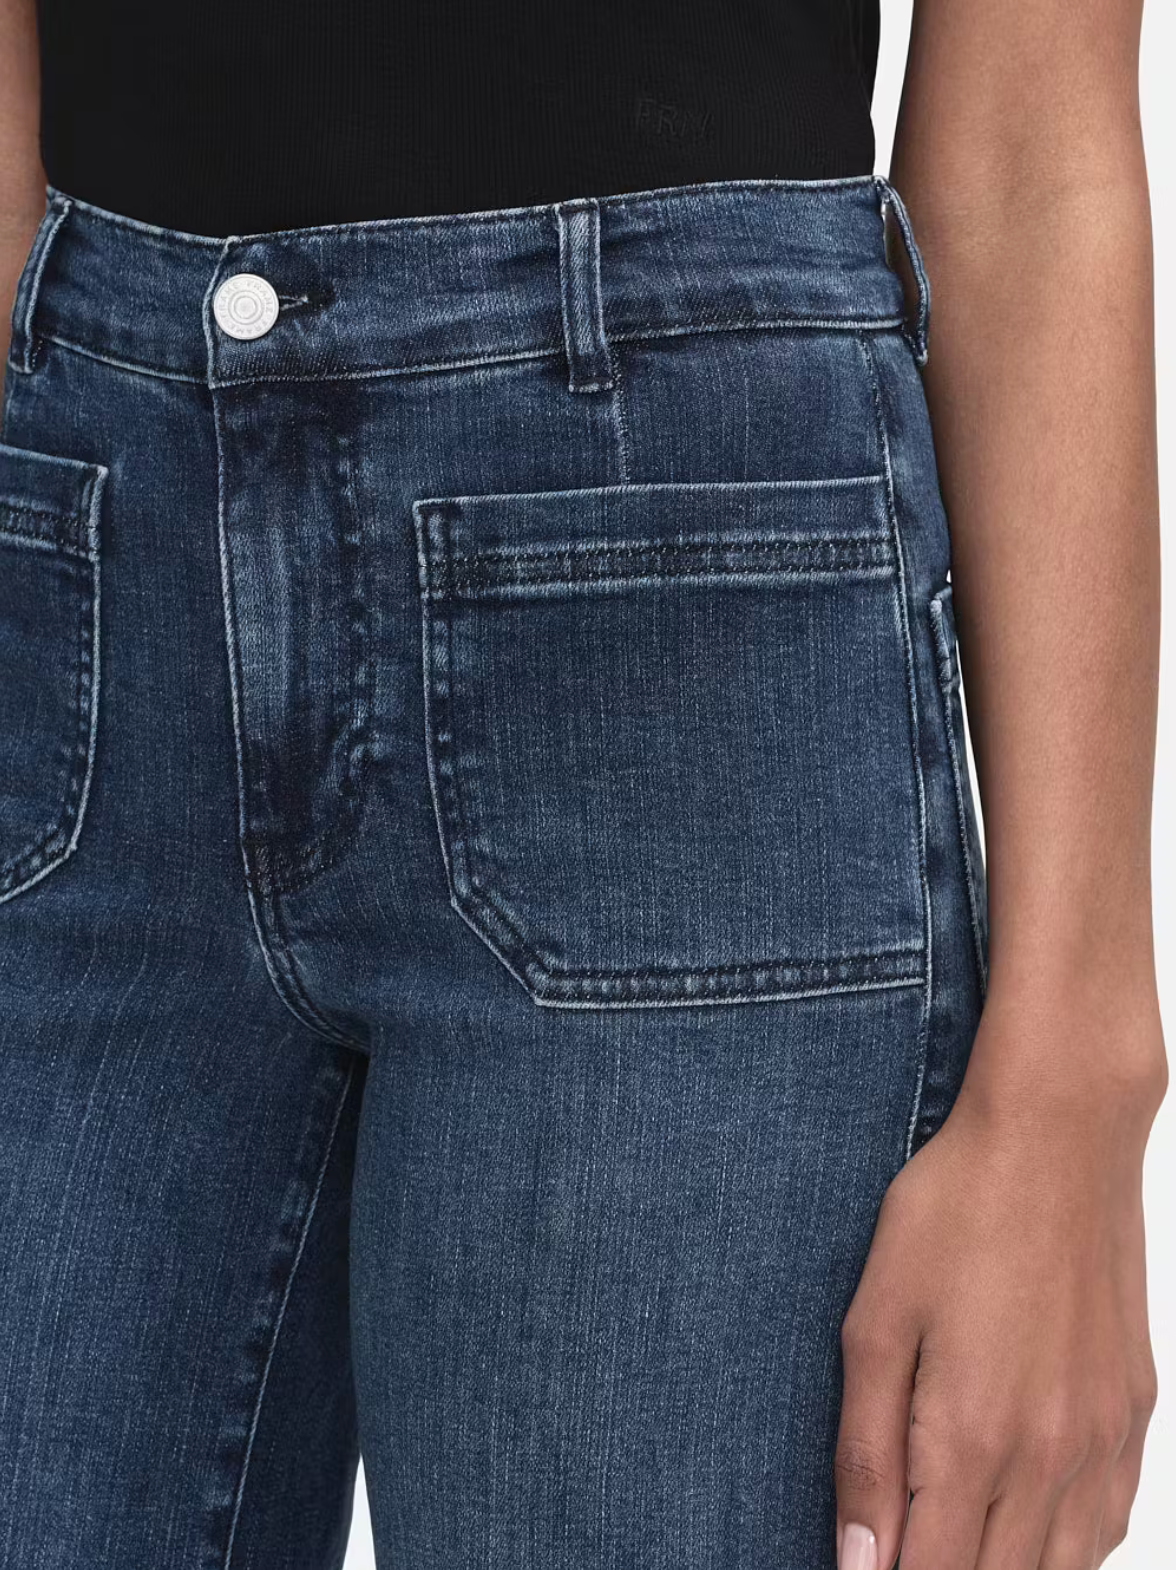 Model wears wide leg jeans in a dark wash. Features front pockets.